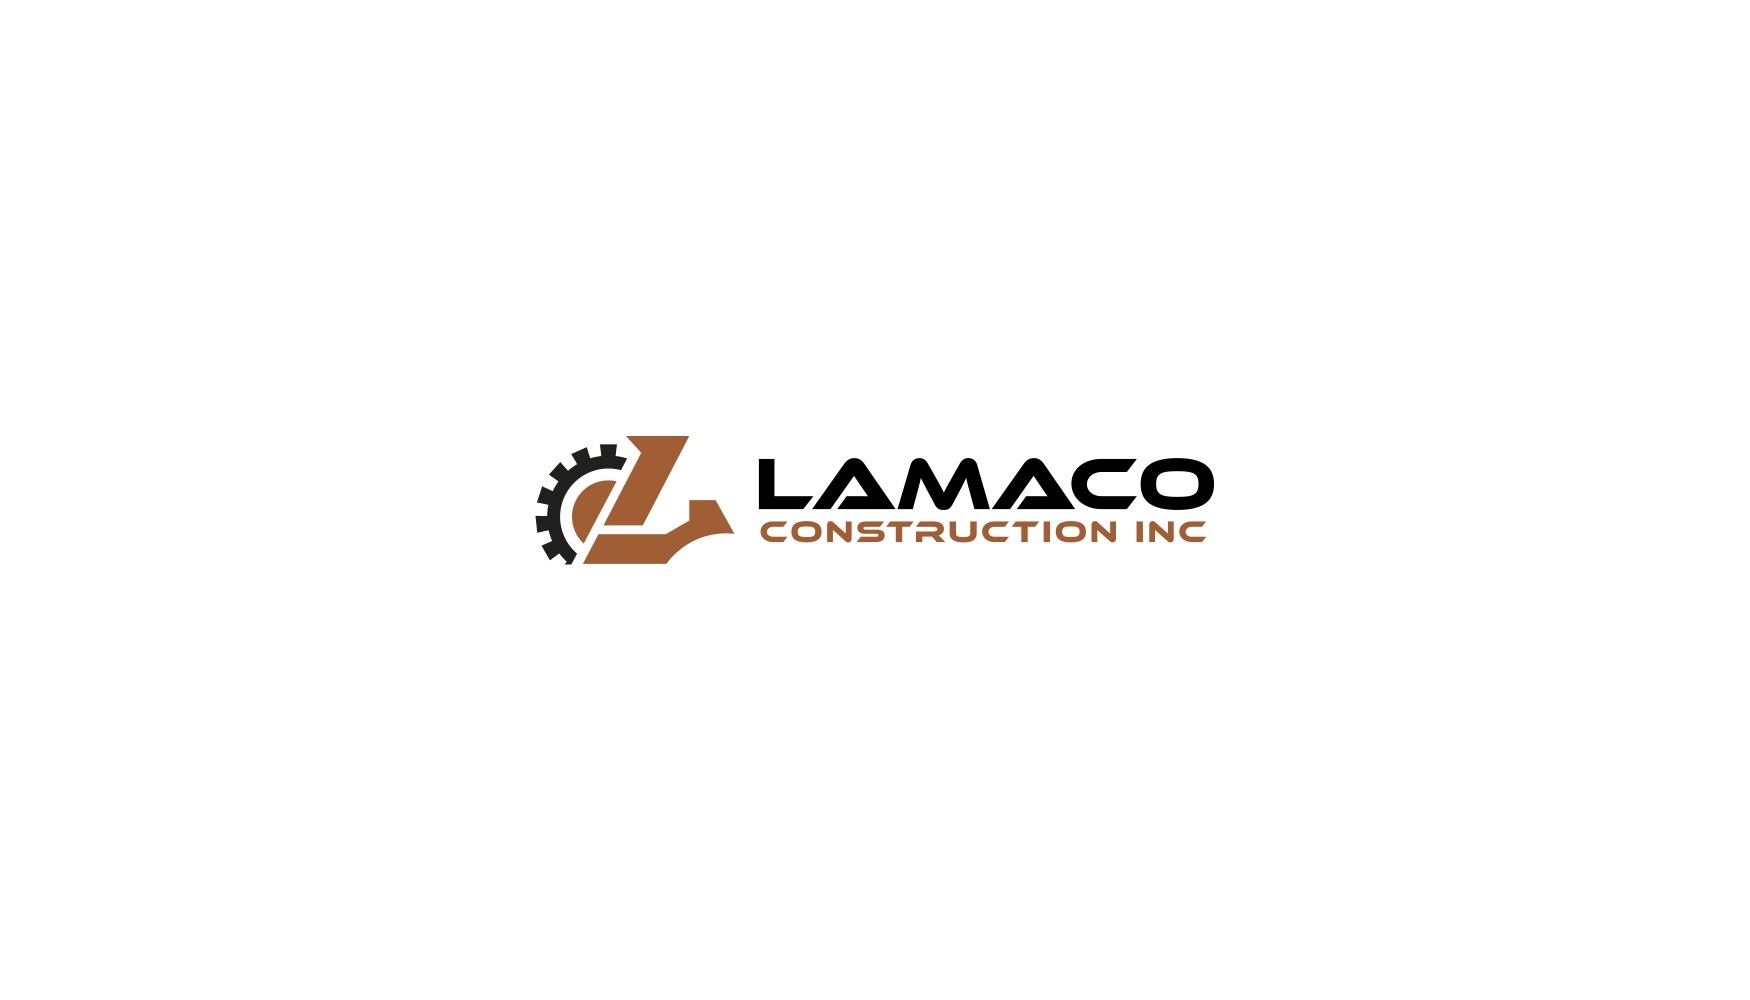 Lamaco Construction Inc.'s logo